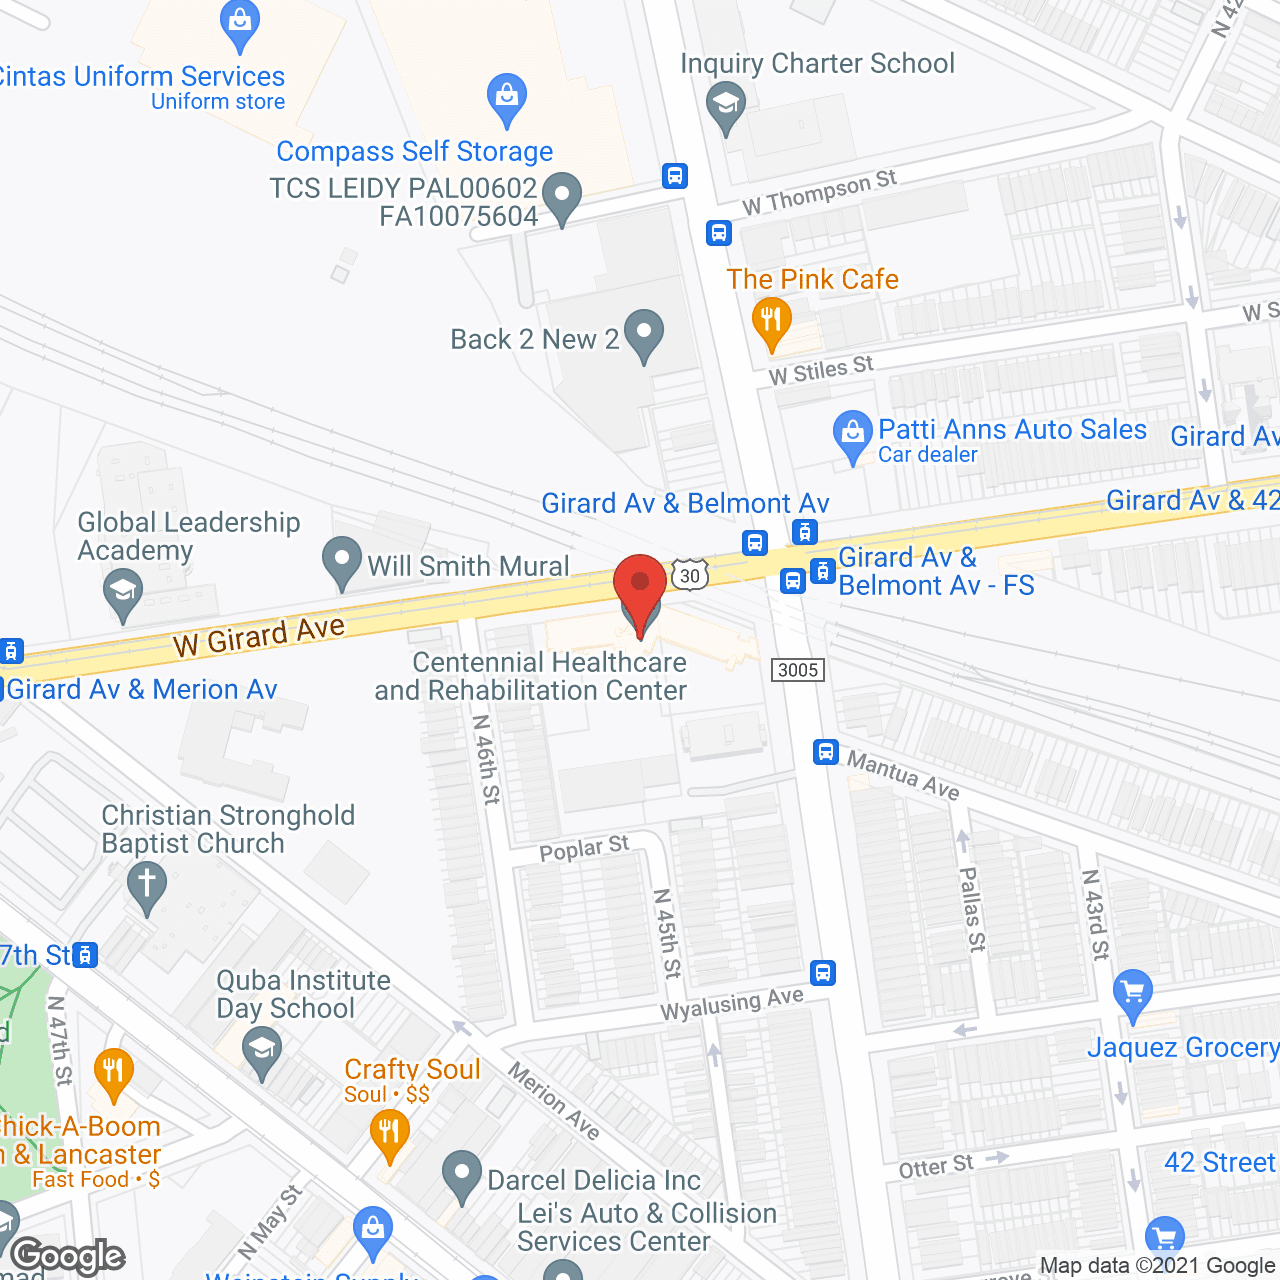 Centennial Healthcare and Rehabilitation Center in google map